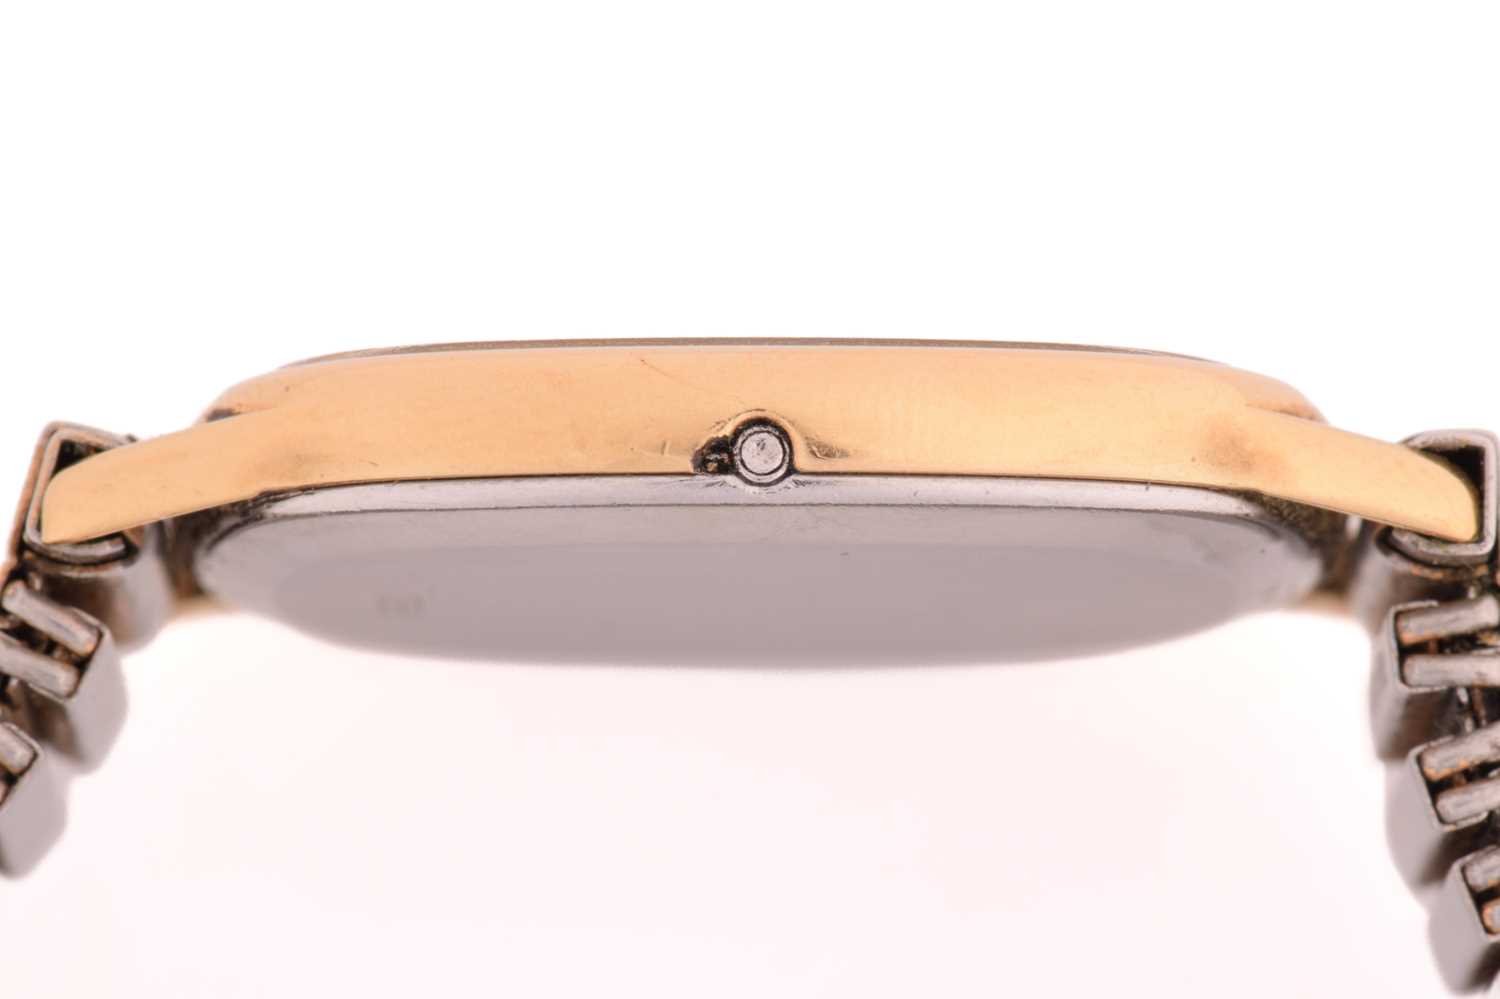 An Omega DeVille quartz dress watch, featuring a Swiss-made quartz movement in a steel gilt case - Image 7 of 7